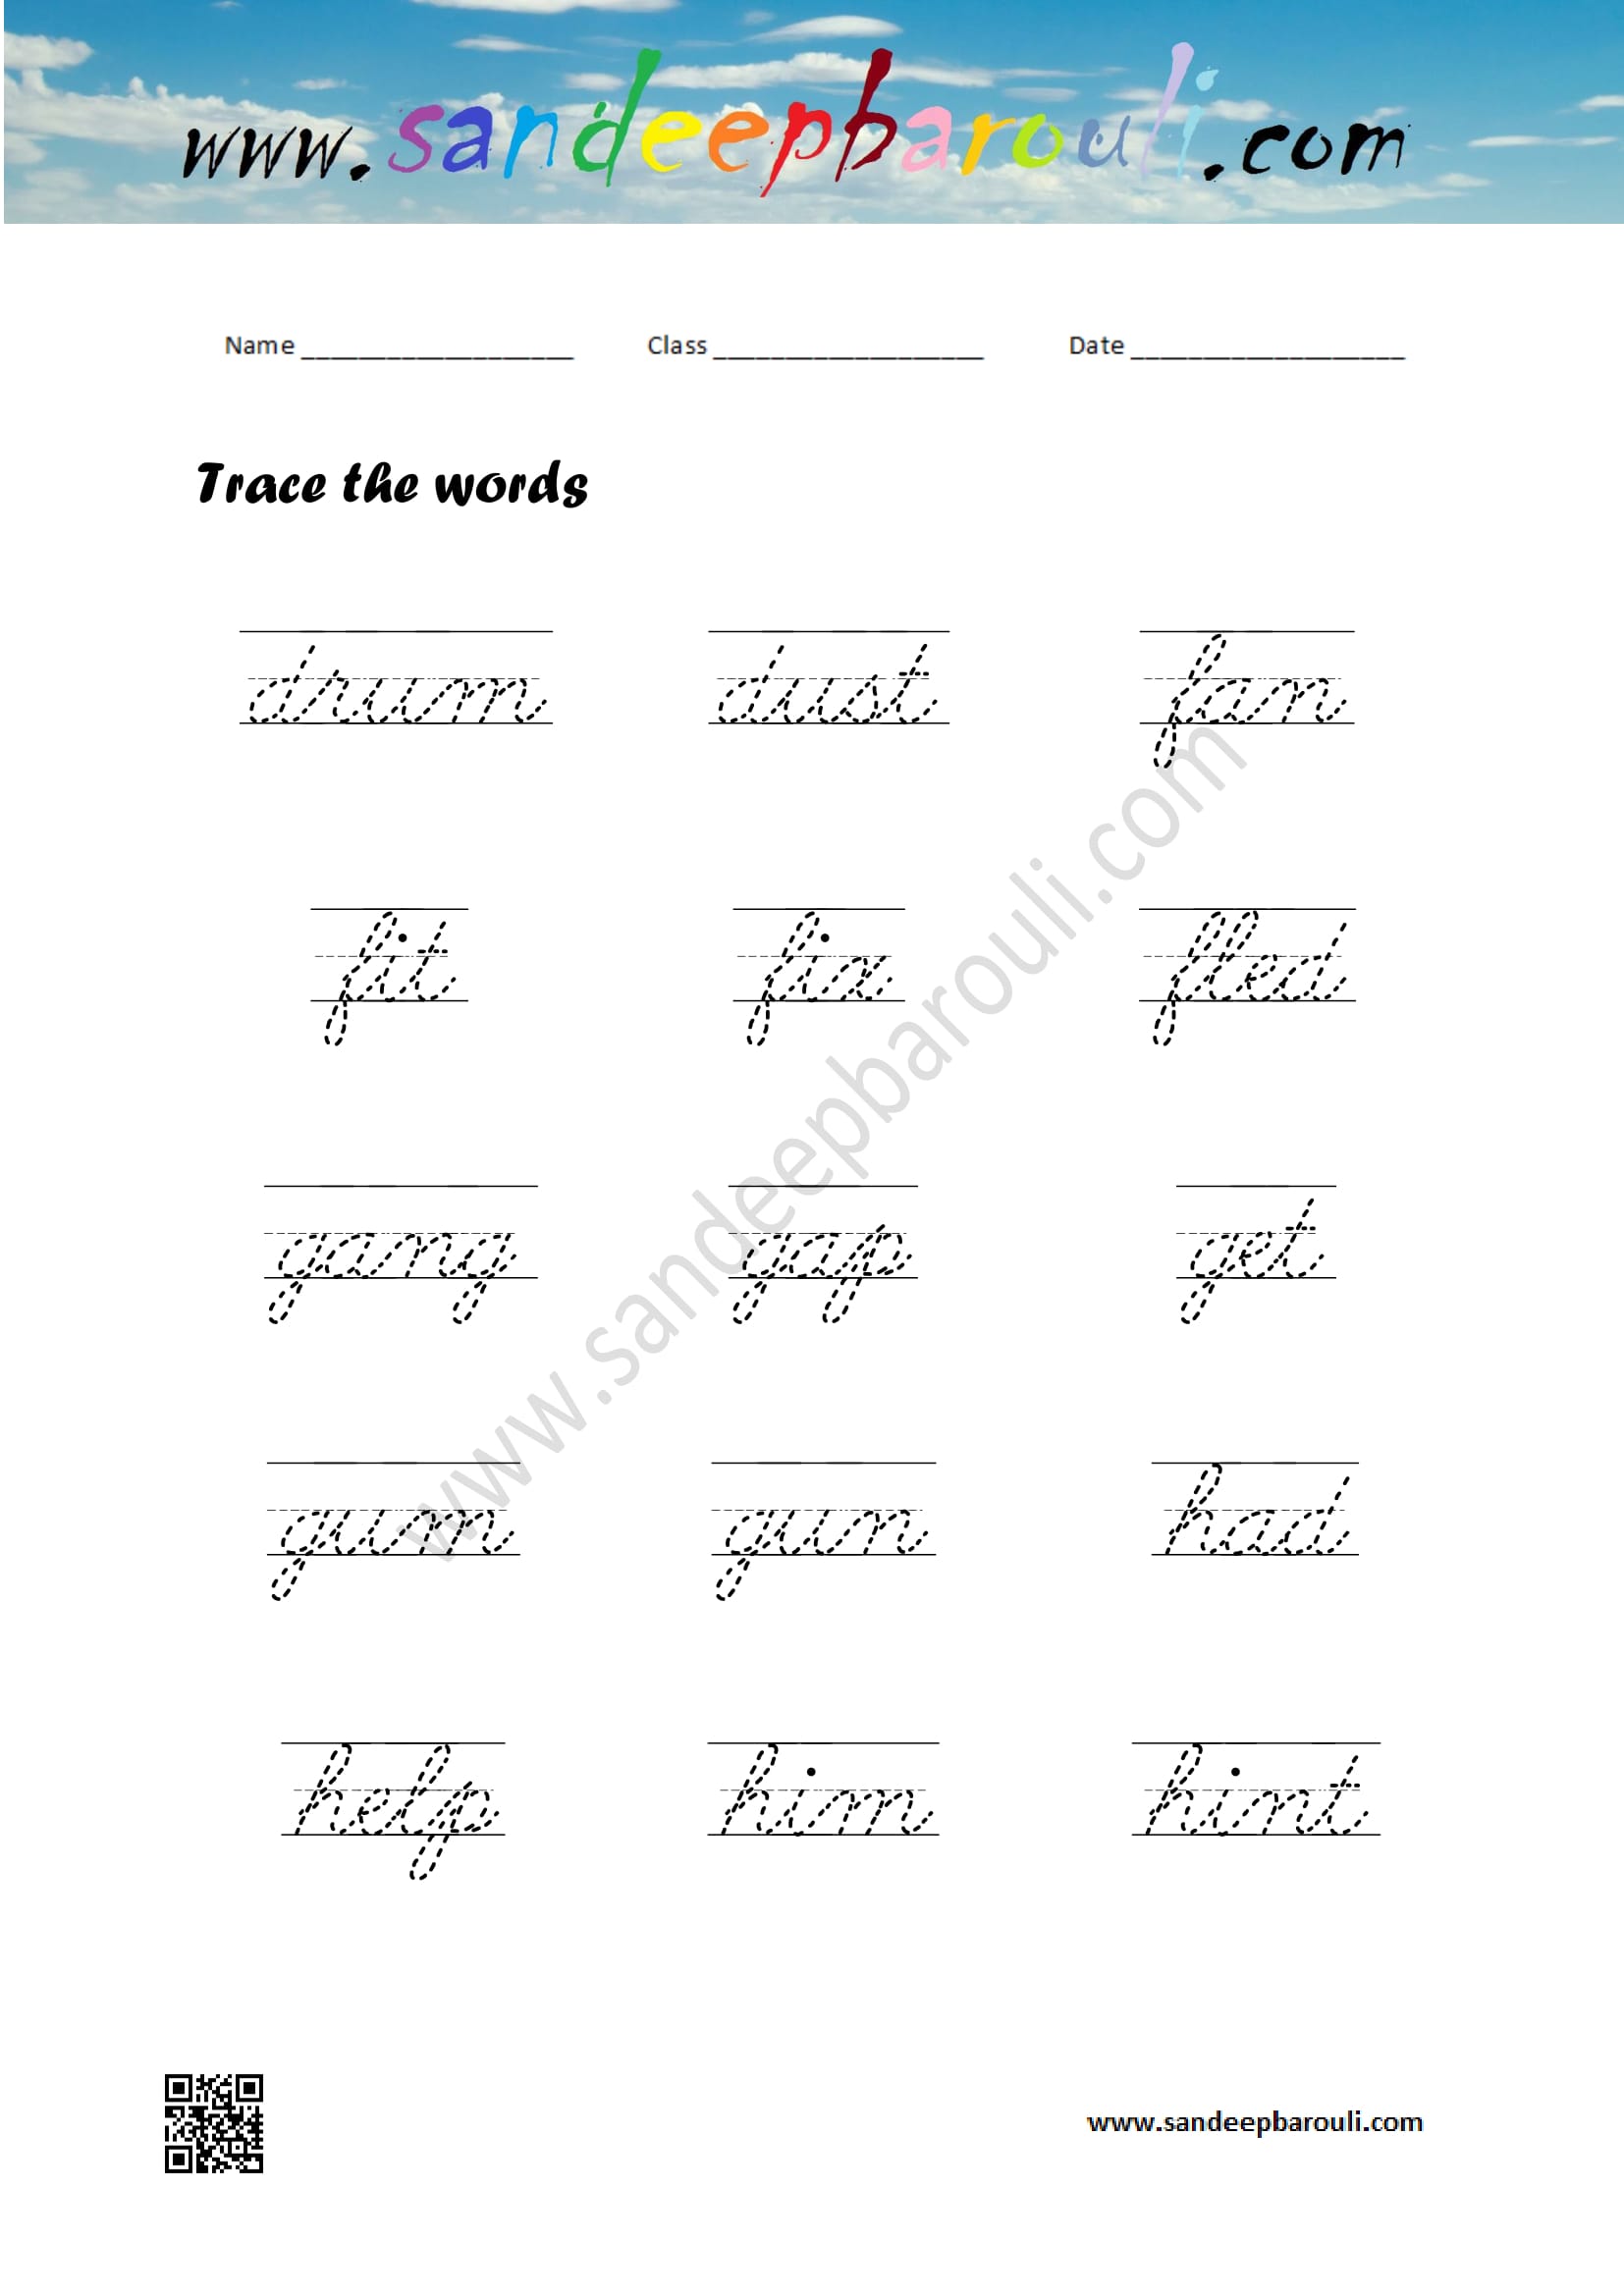 Cursive Writing Worksheet – Trace the words 25  SandeepBarouli.Com